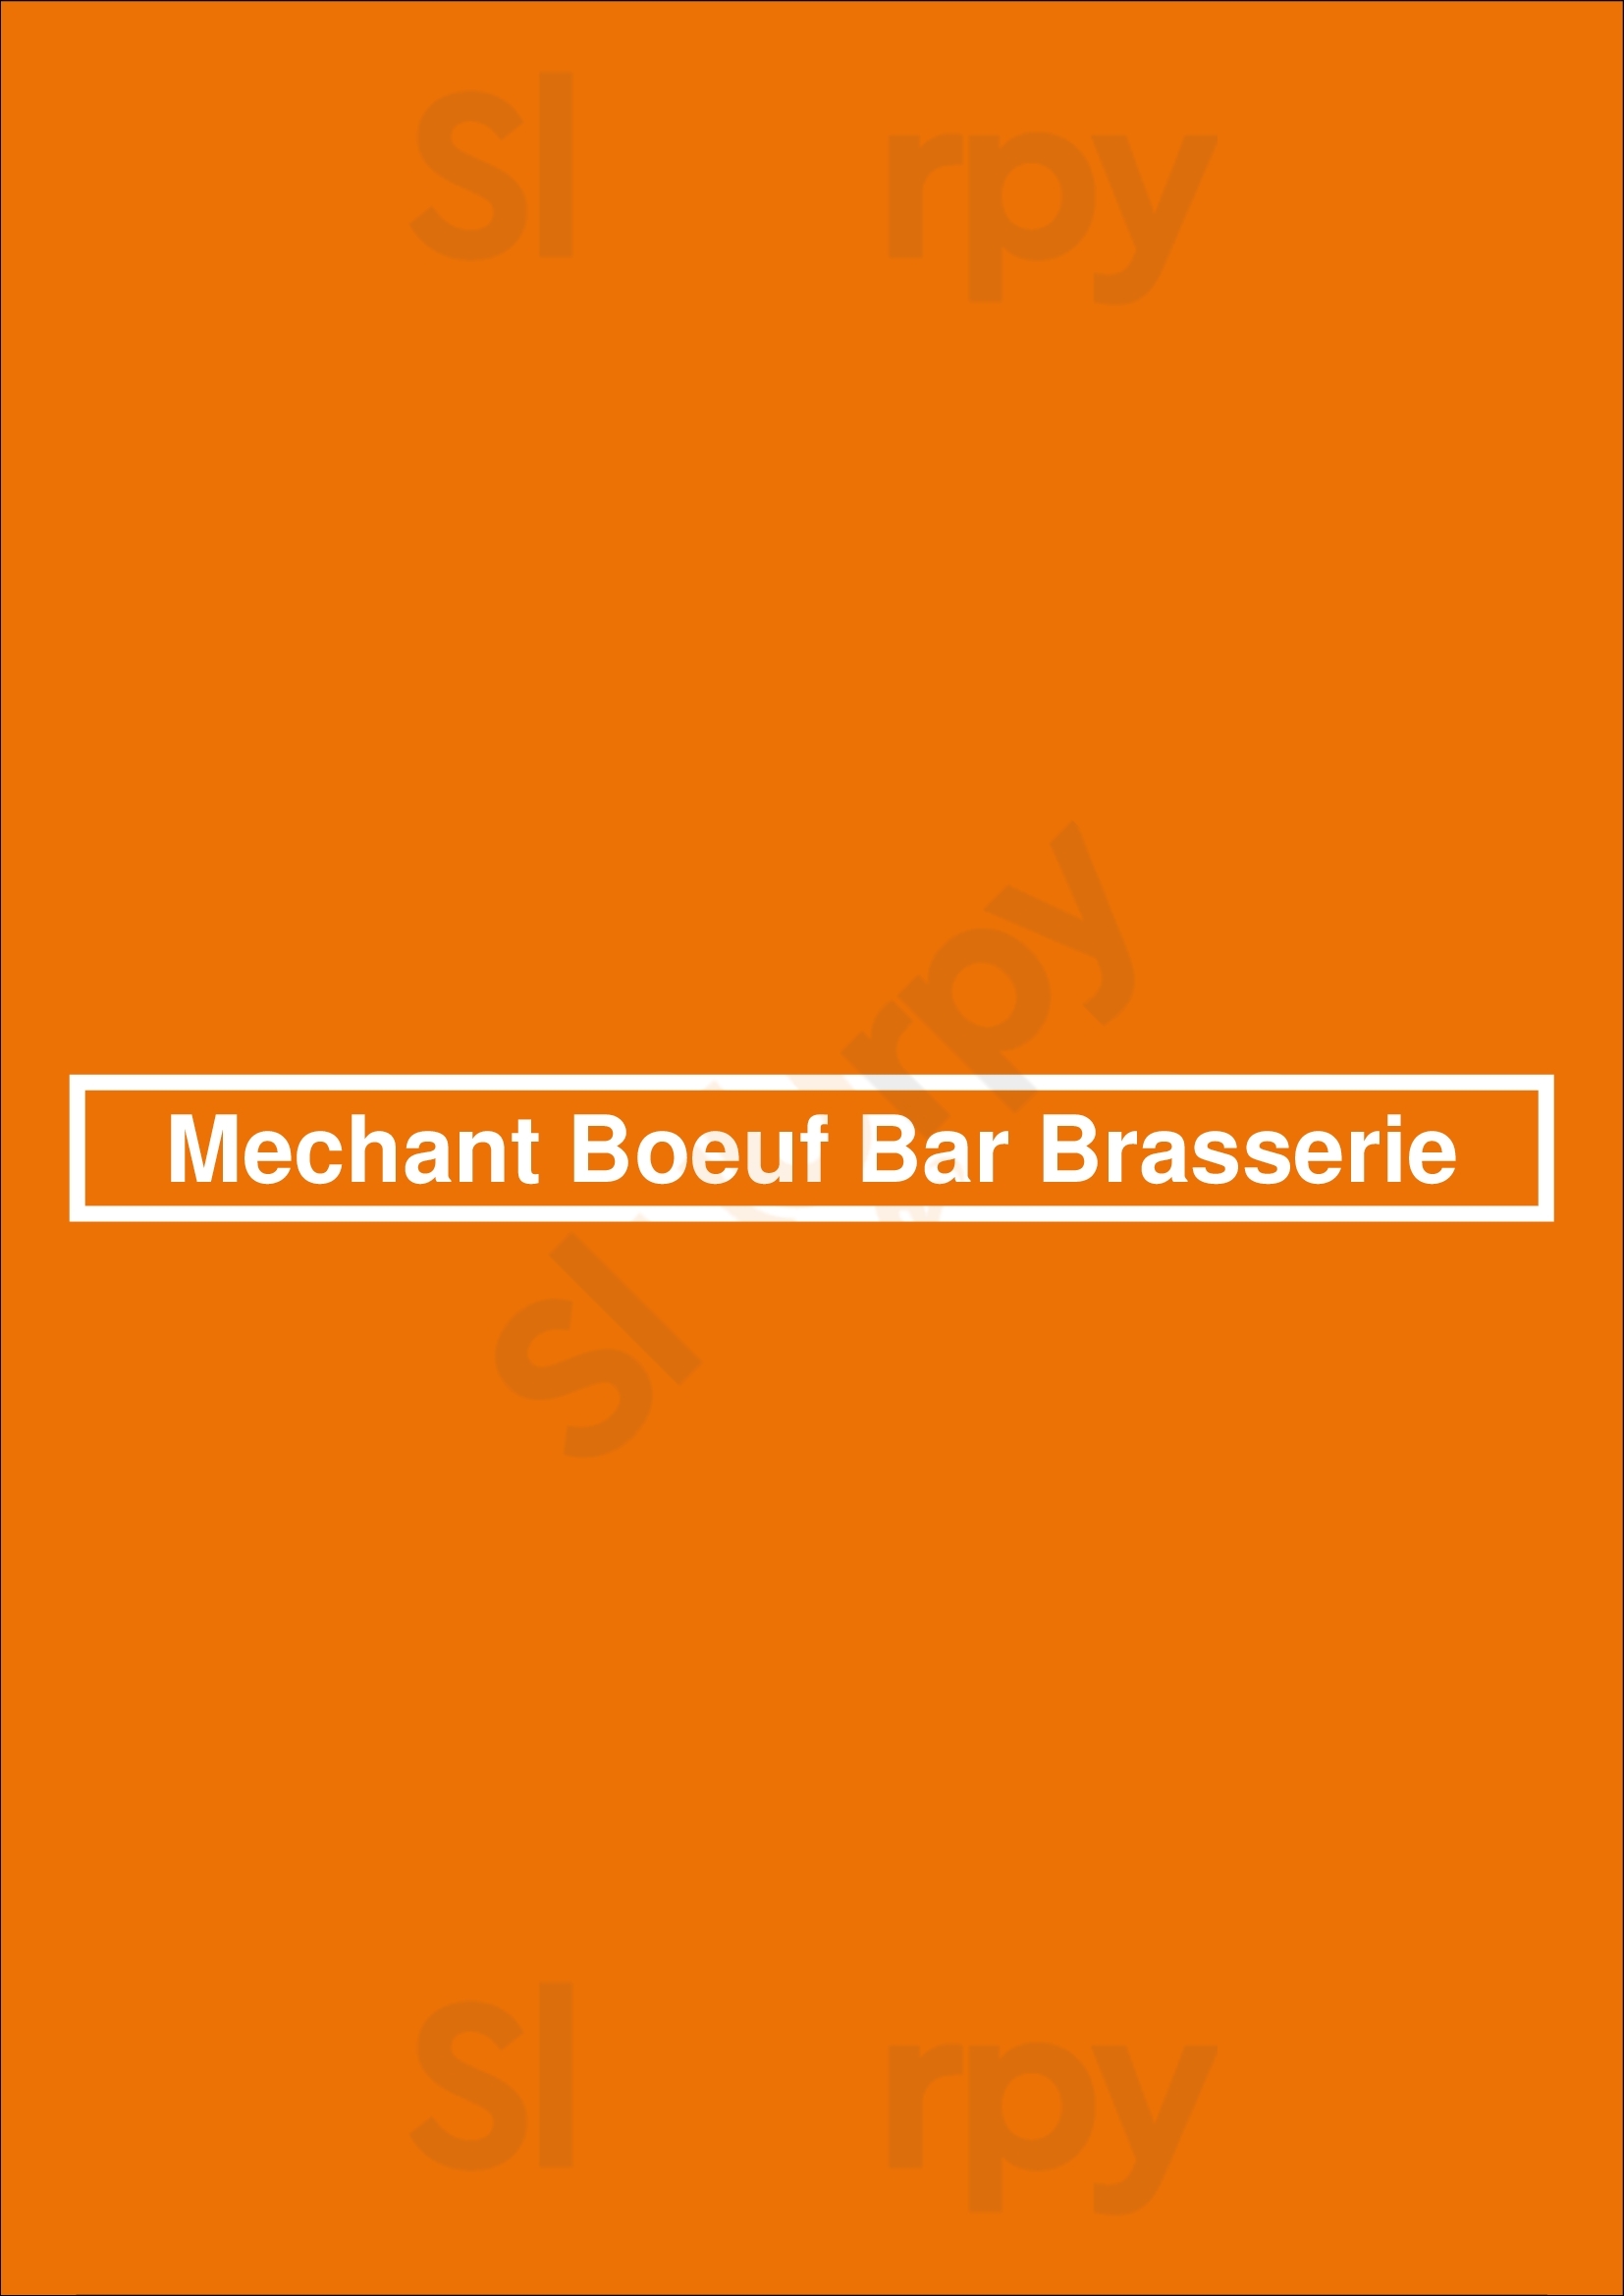 Mechant Boeuf Bar Brasserie Montreal Menu - 1